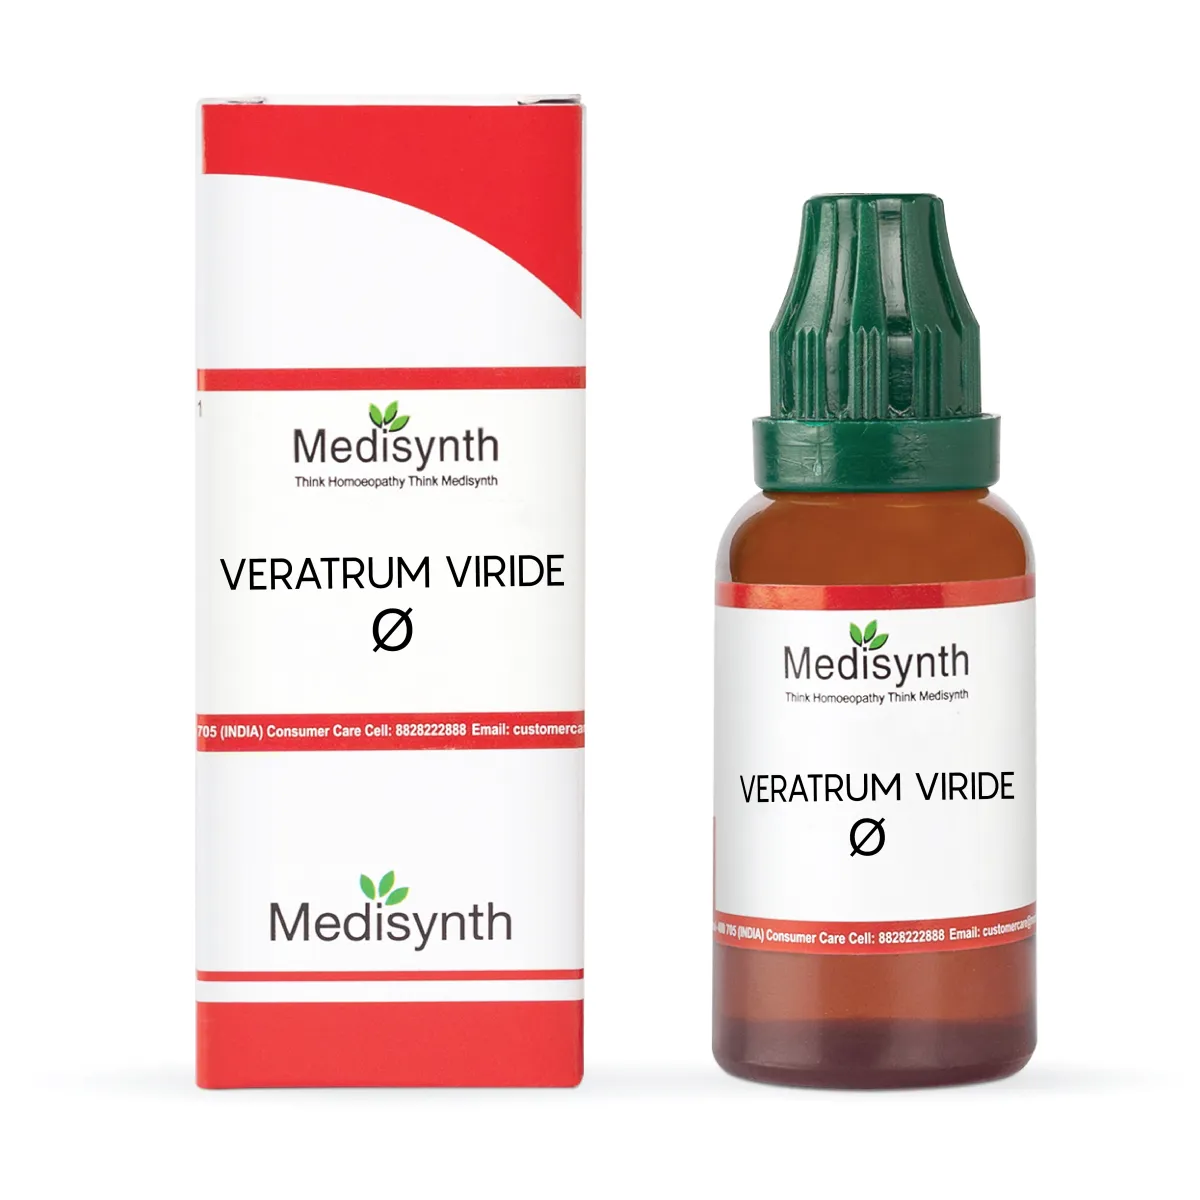 Medisynth Veratrum Viride 1X Q 30ml